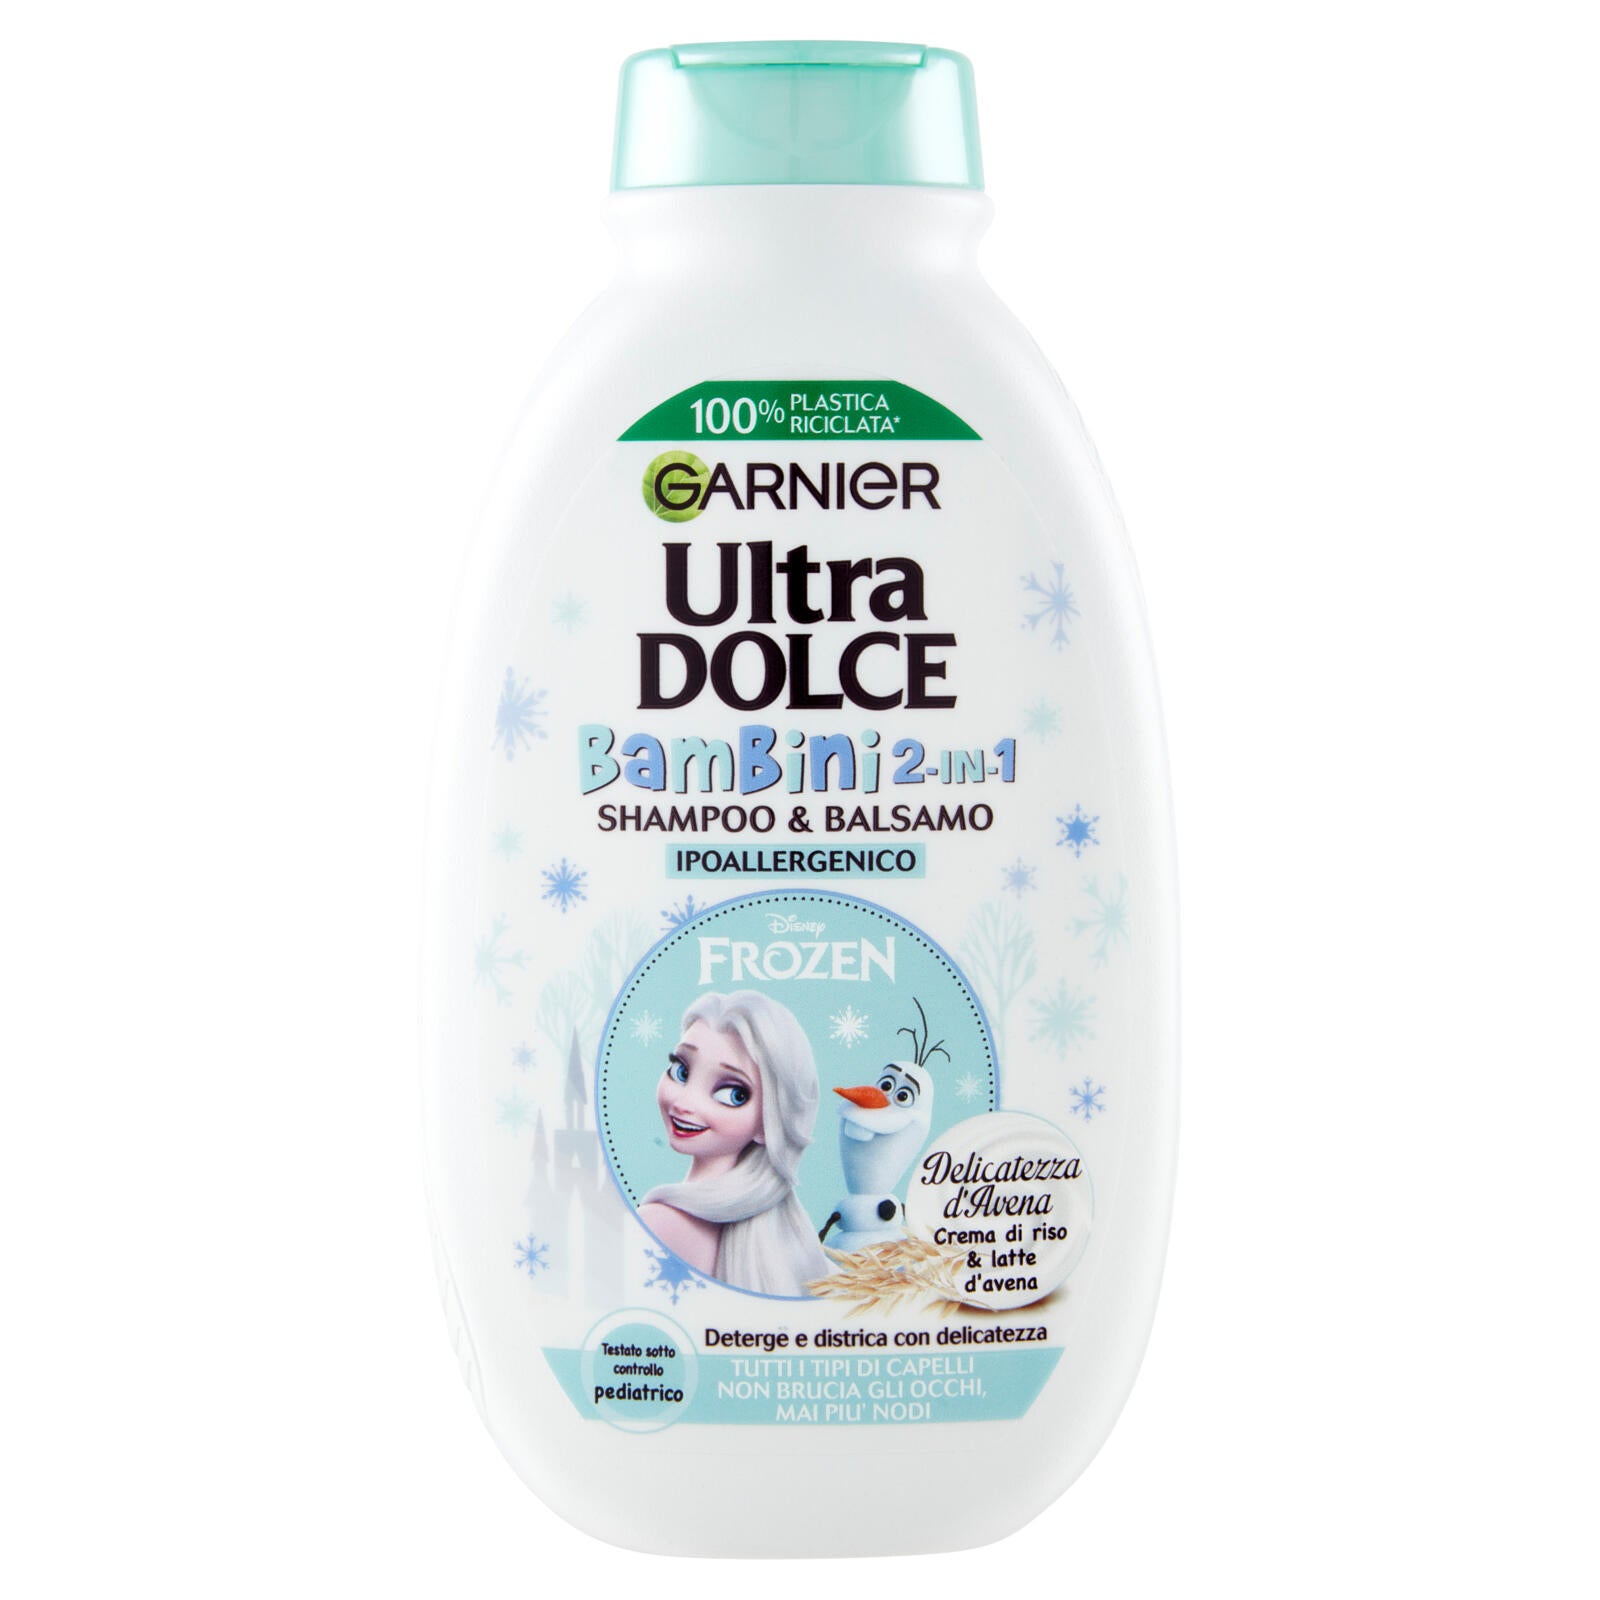 Garnier Shampoo 2in1 Ultra Dolce Delicatezza d'Avena 2in1 Kids, Per Capelli e Cute Delicati, 250 ml